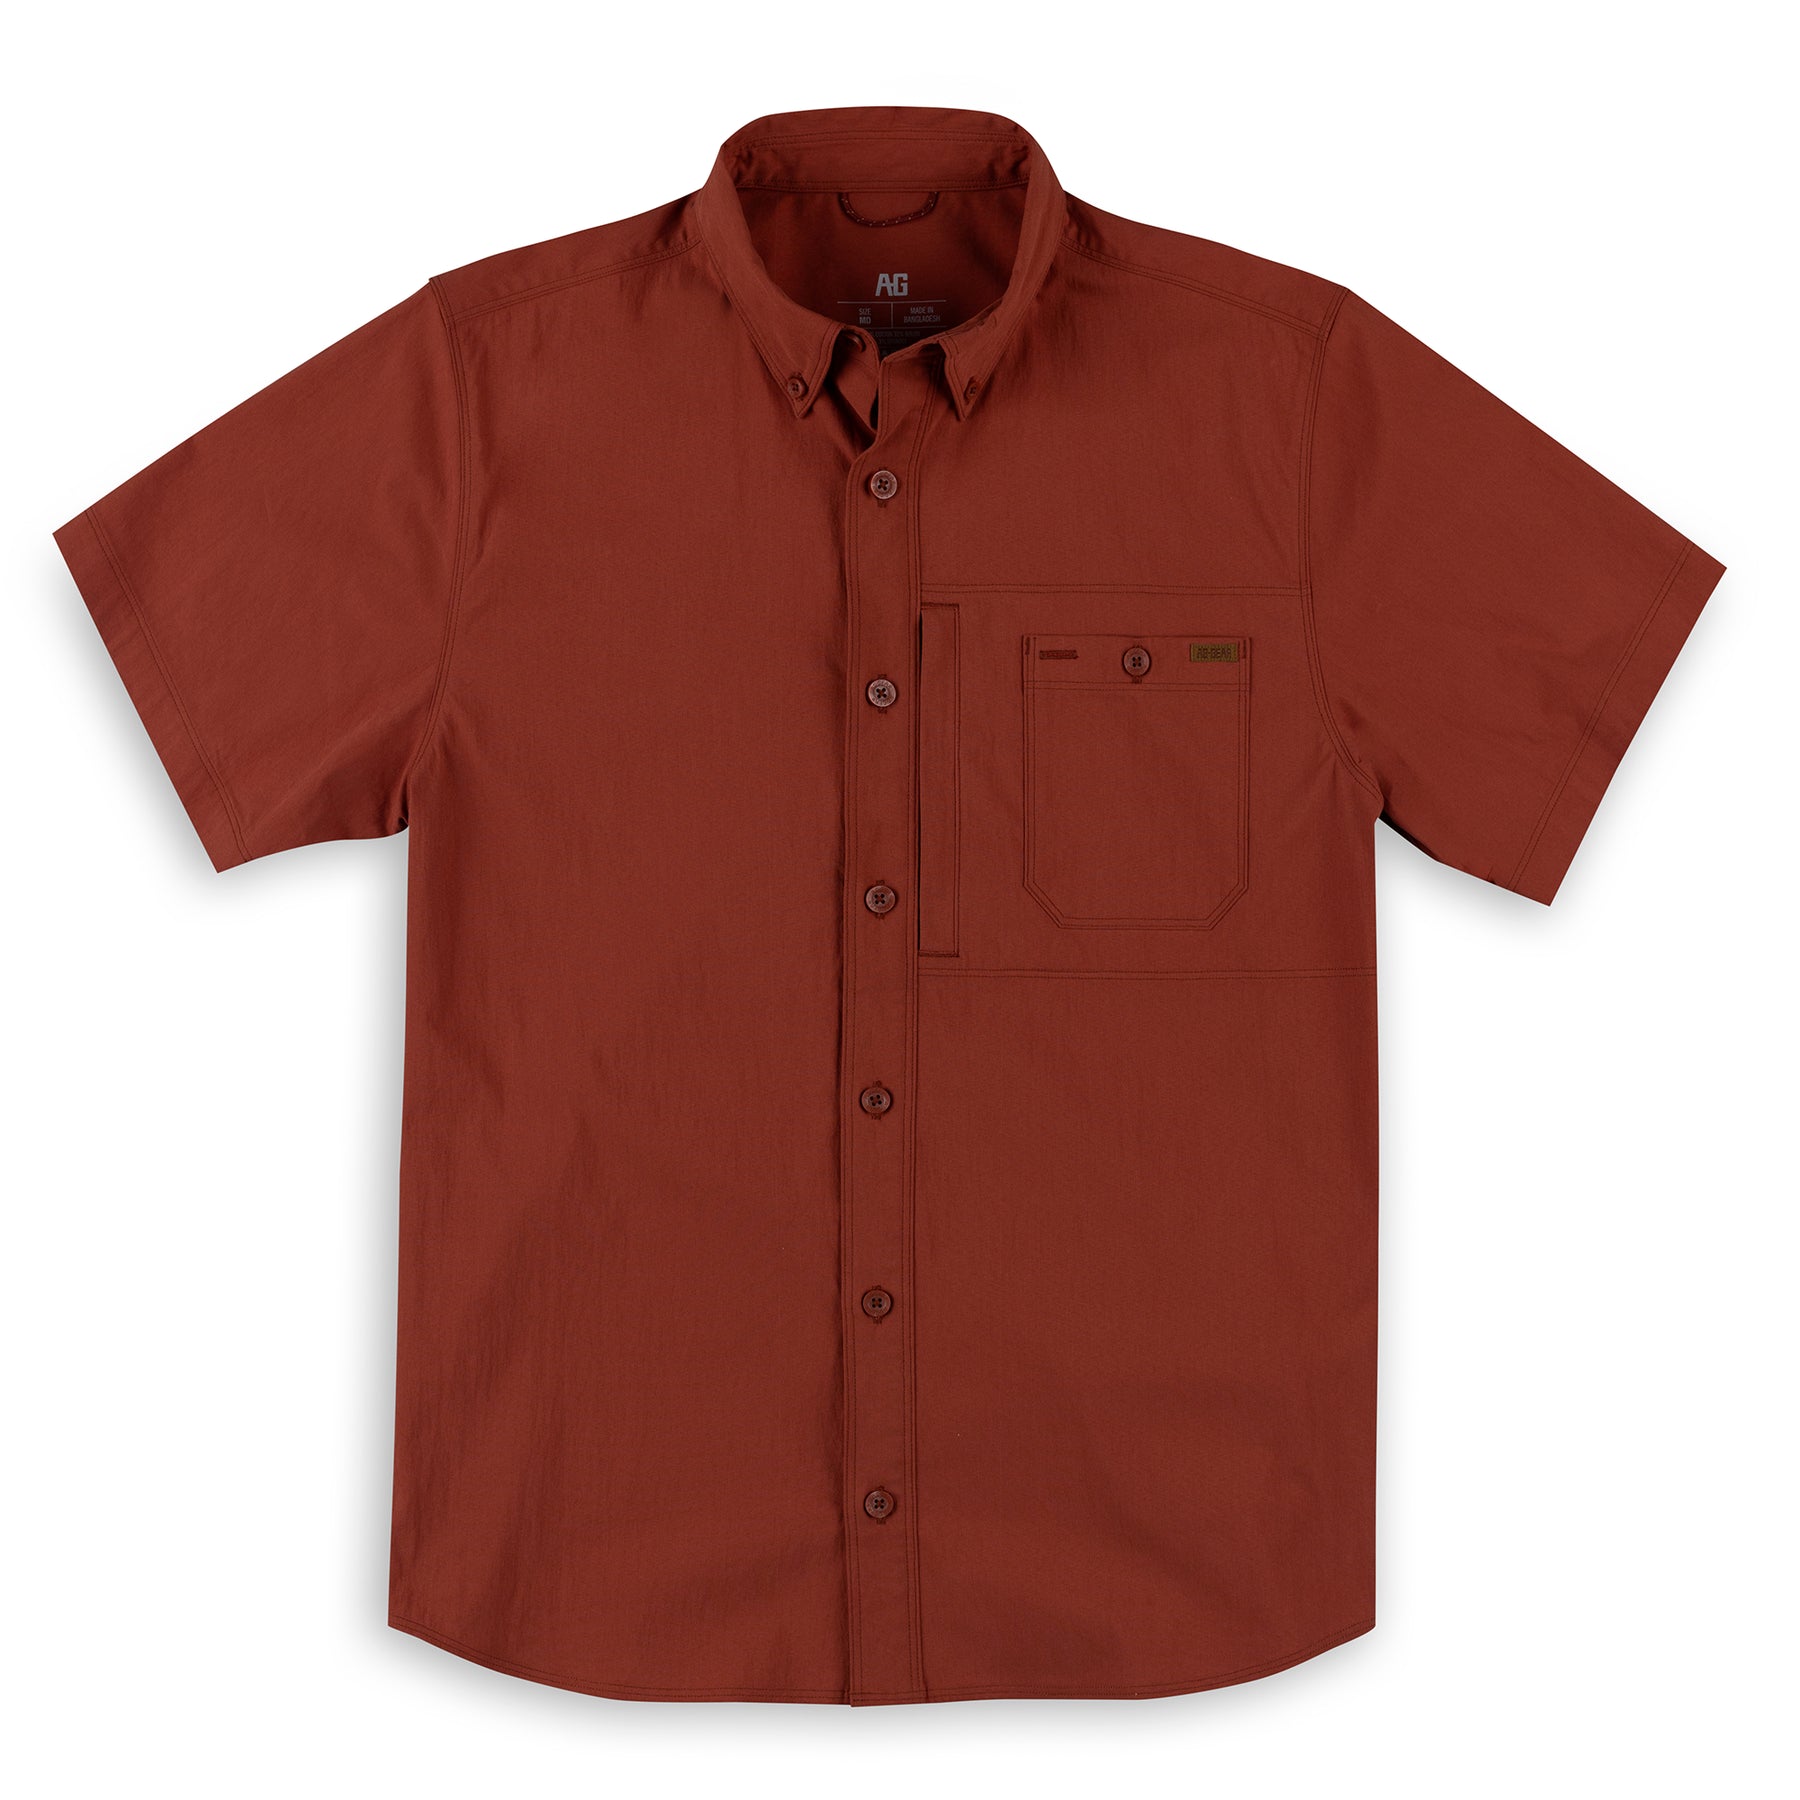 Cotton Farm Shirt, Durable, Water Resistant, Classic Fit, Ranch Shirt Brick / MD